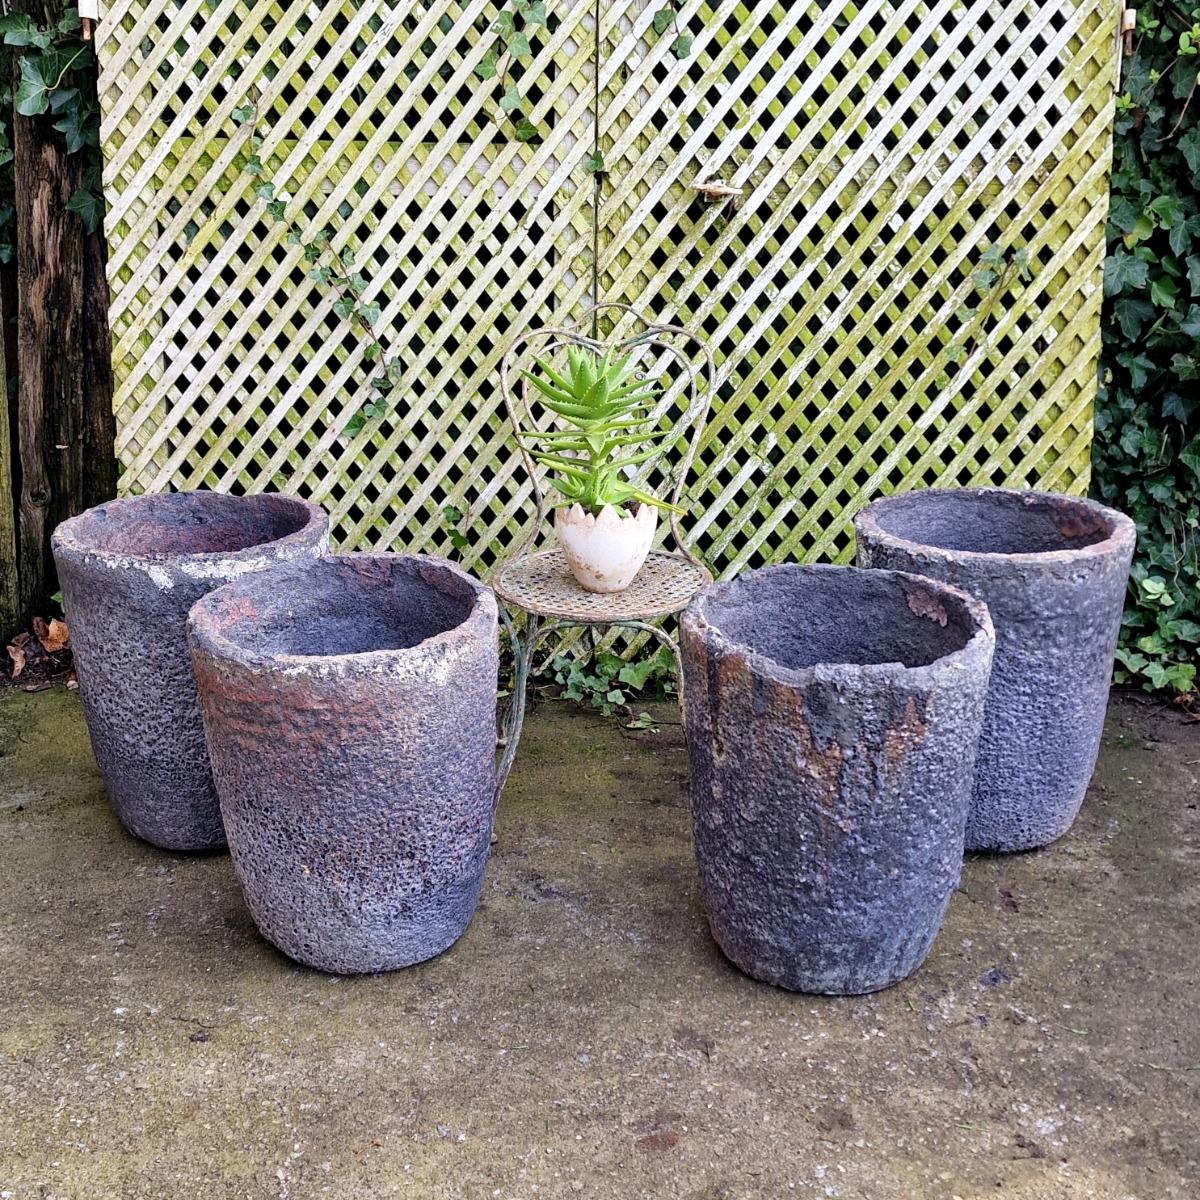 Set of 4 Foundry pots